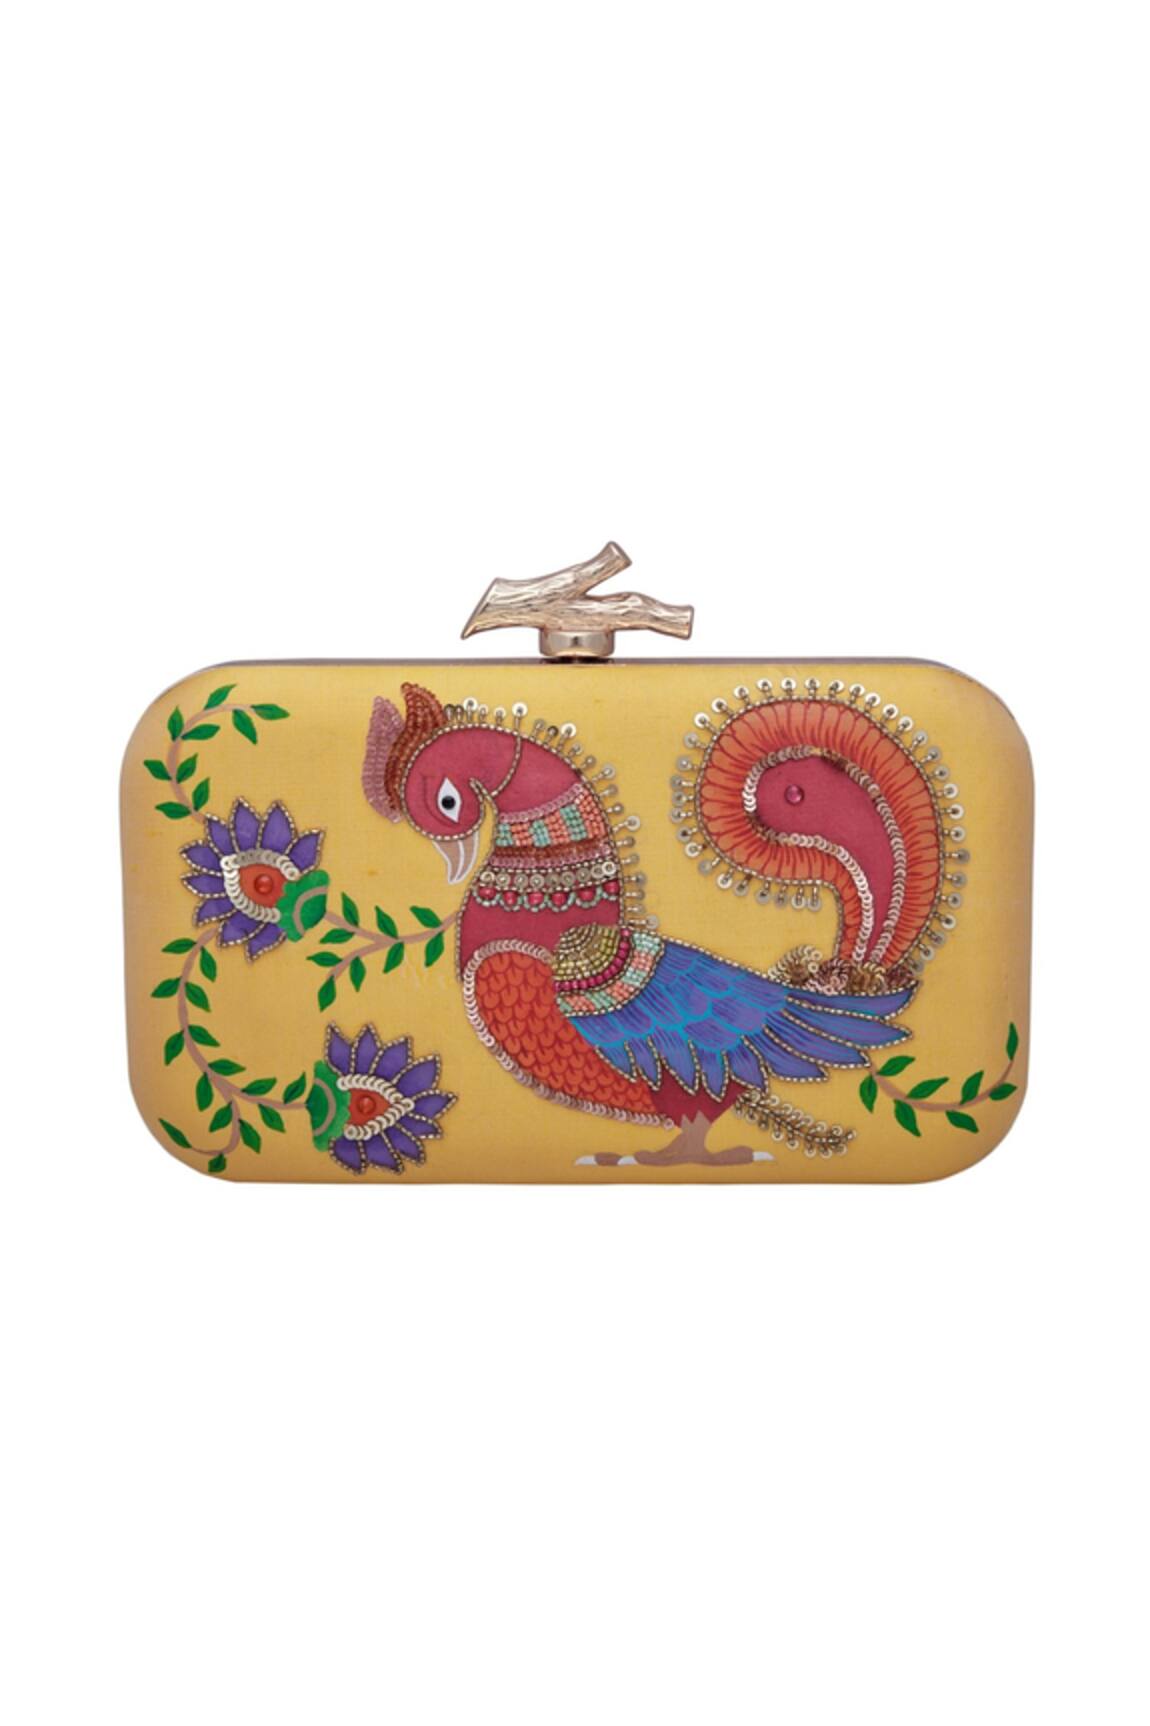 Crazy Palette Parrot & floral motif embroidered clutch